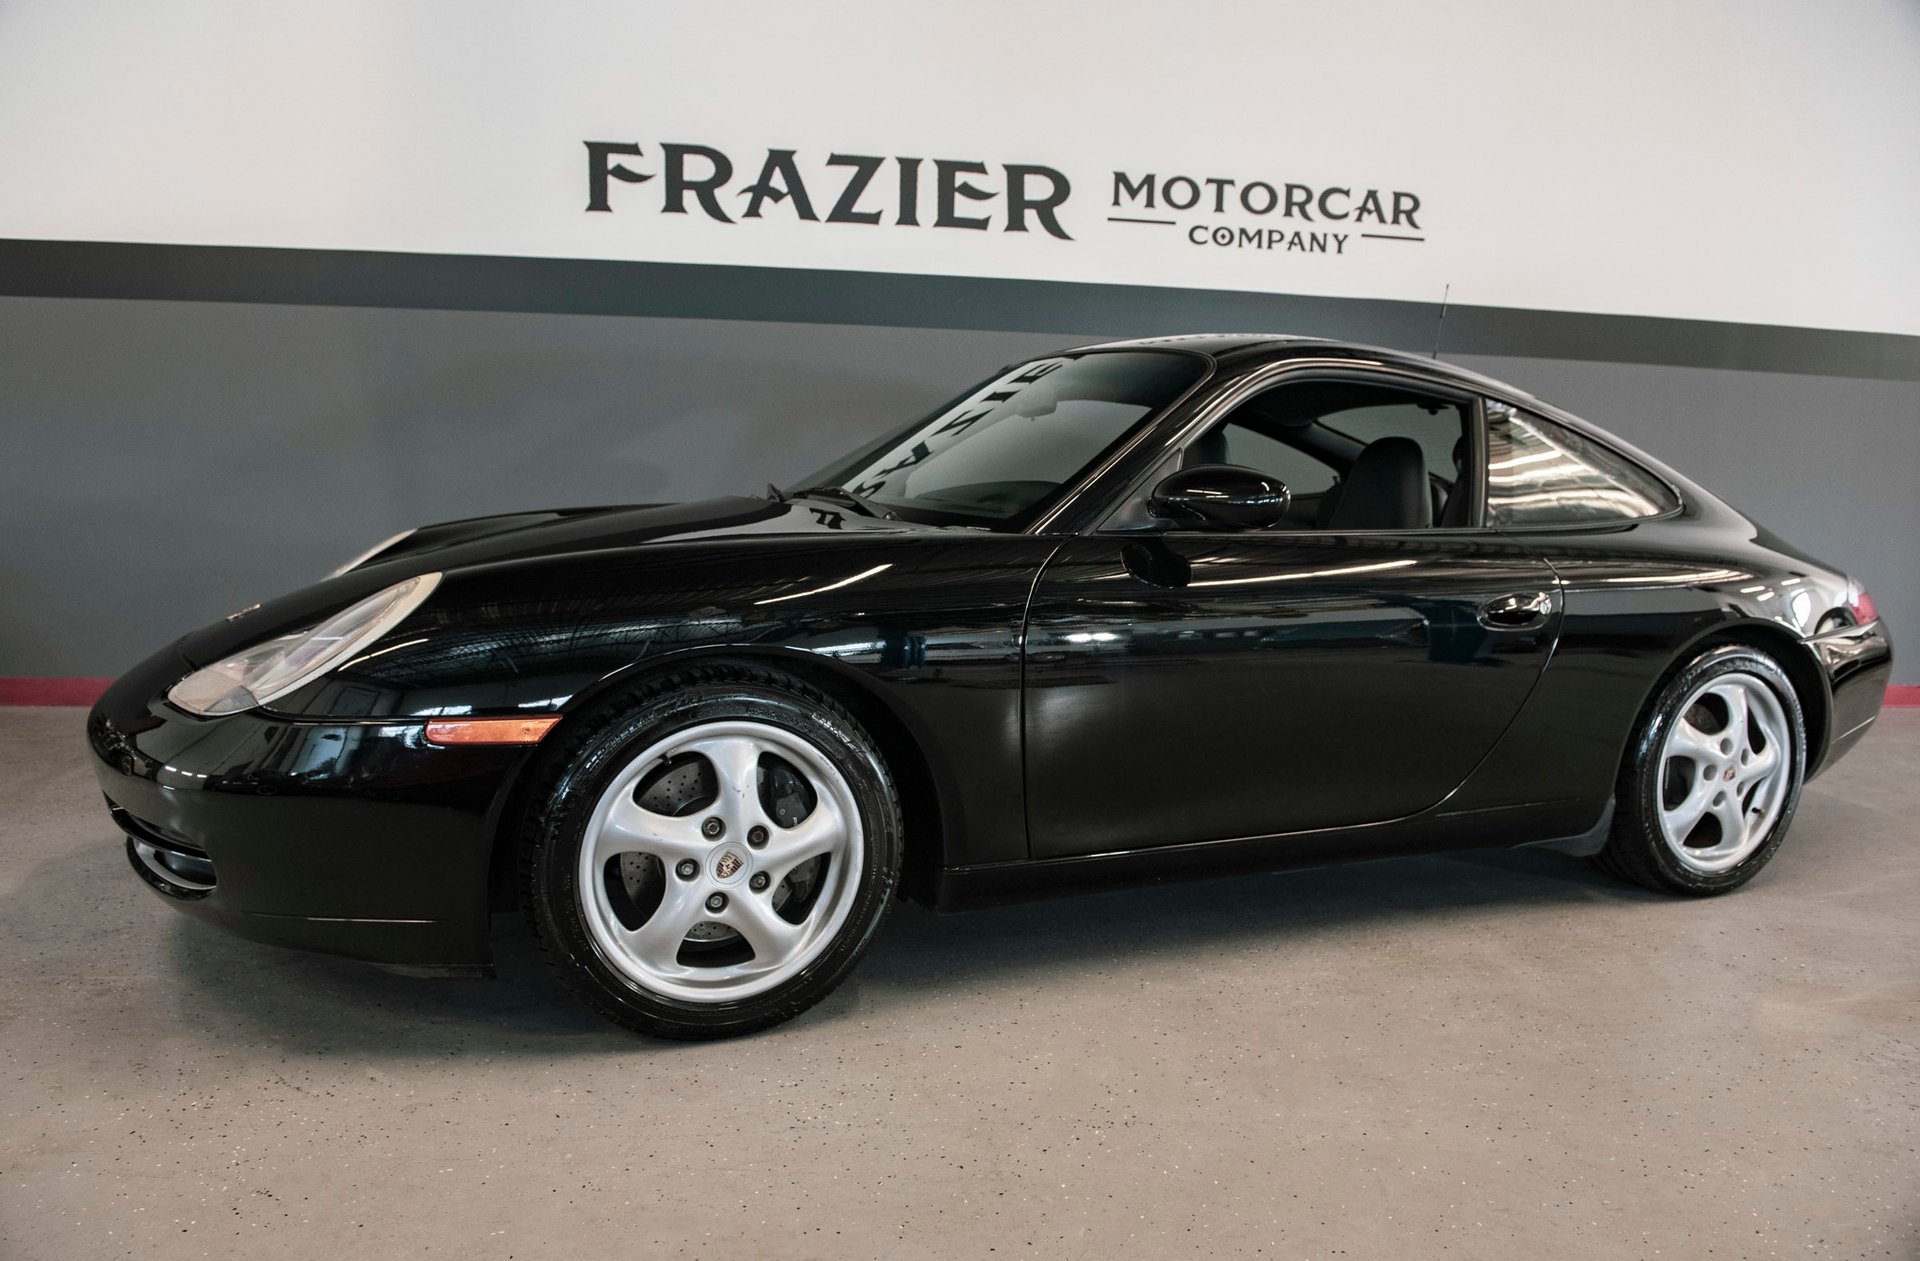 2000 Porsche 911 Carrera | Frazier Motorcar Company